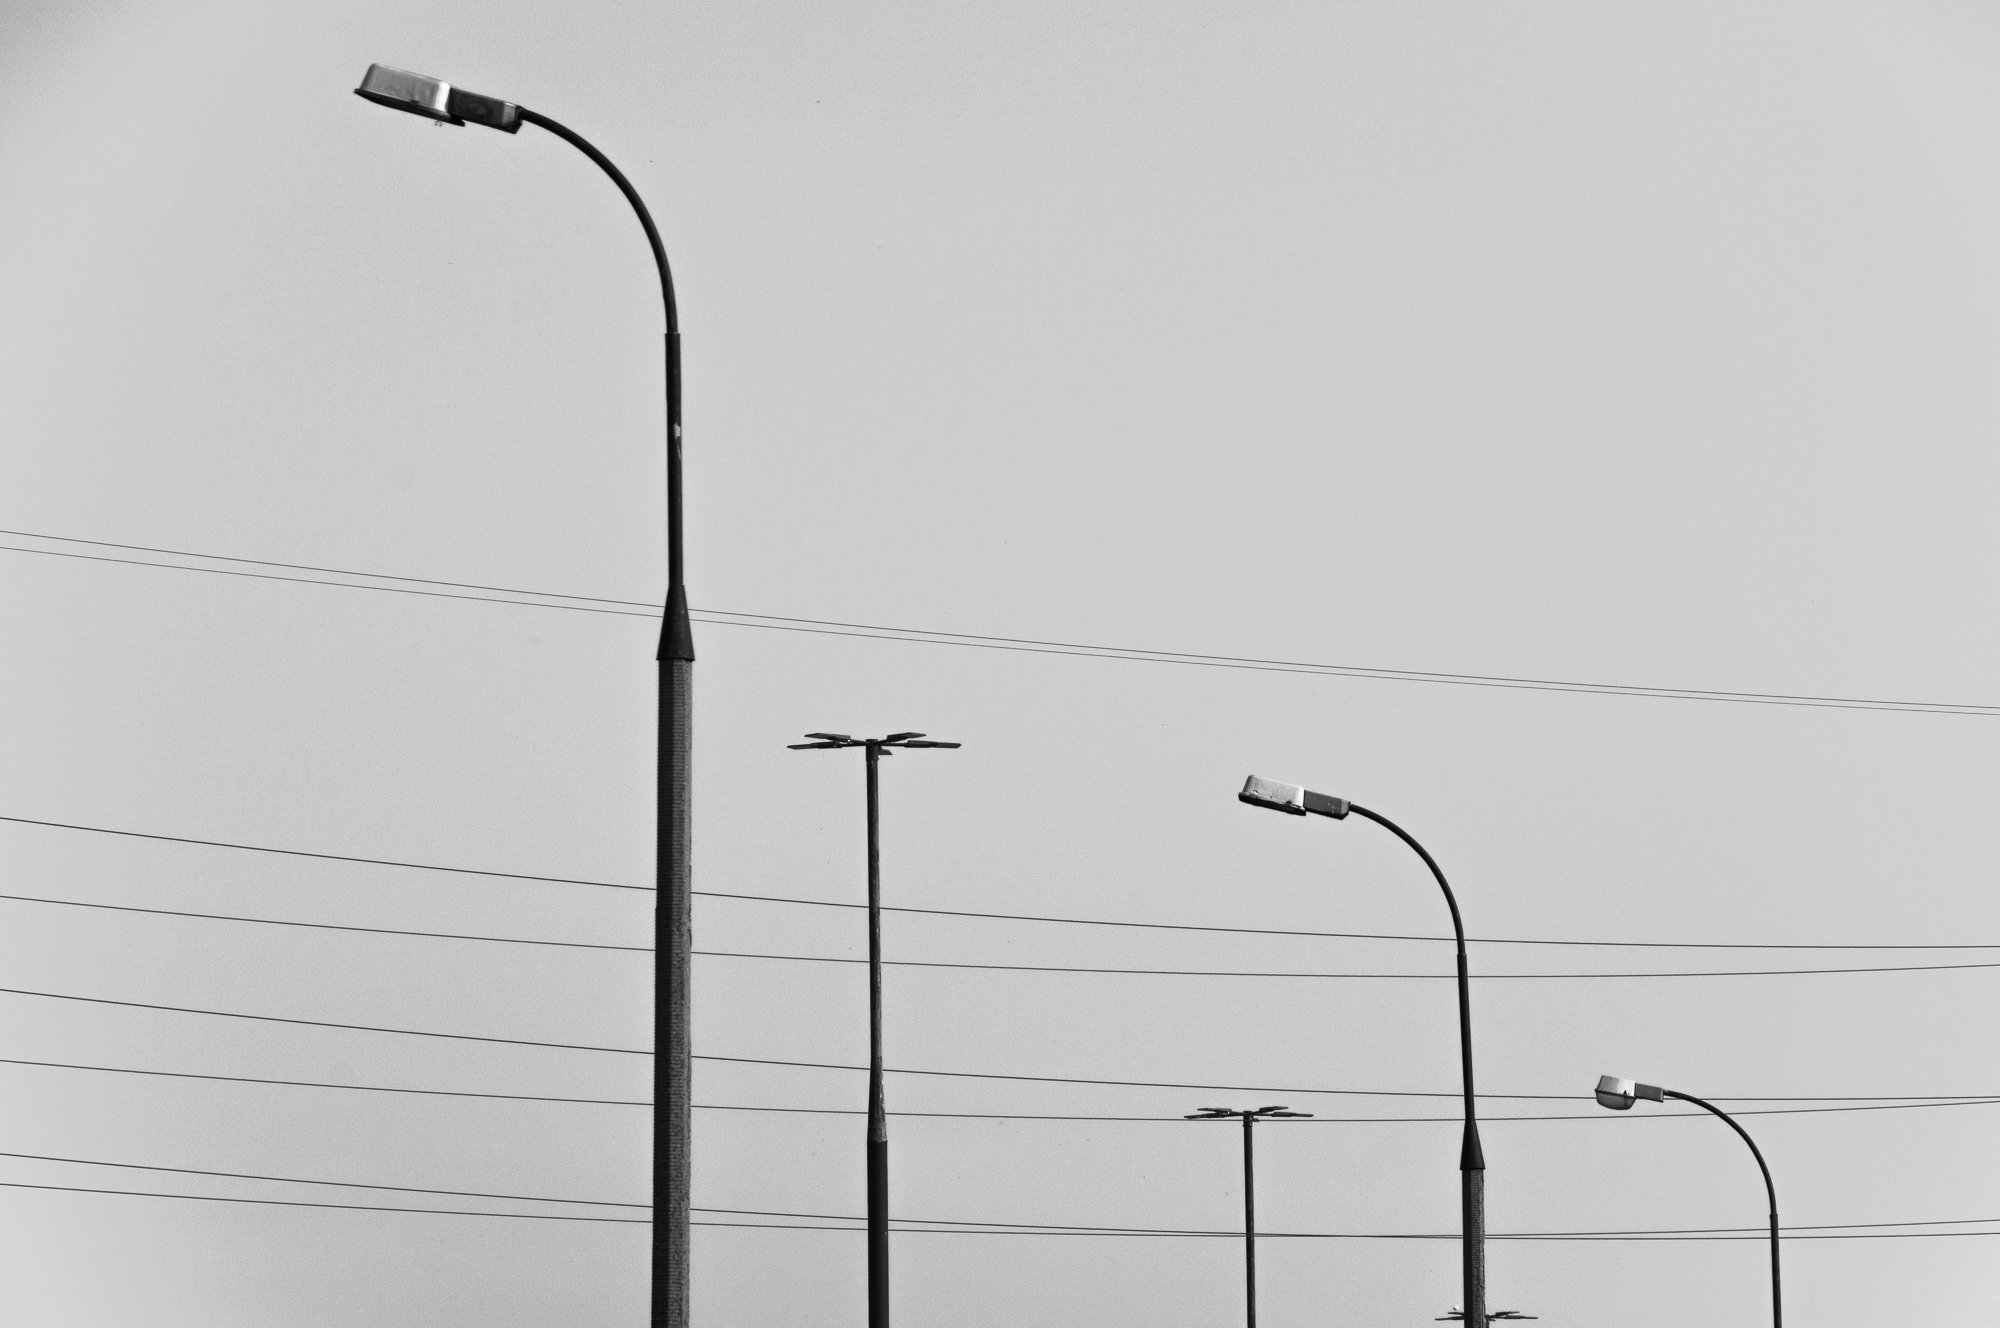 Adam Mazek Photography Warsaw (Warszawa) 2020. Post: "Writing in the late afternoon." Minimalism. Street lamps.